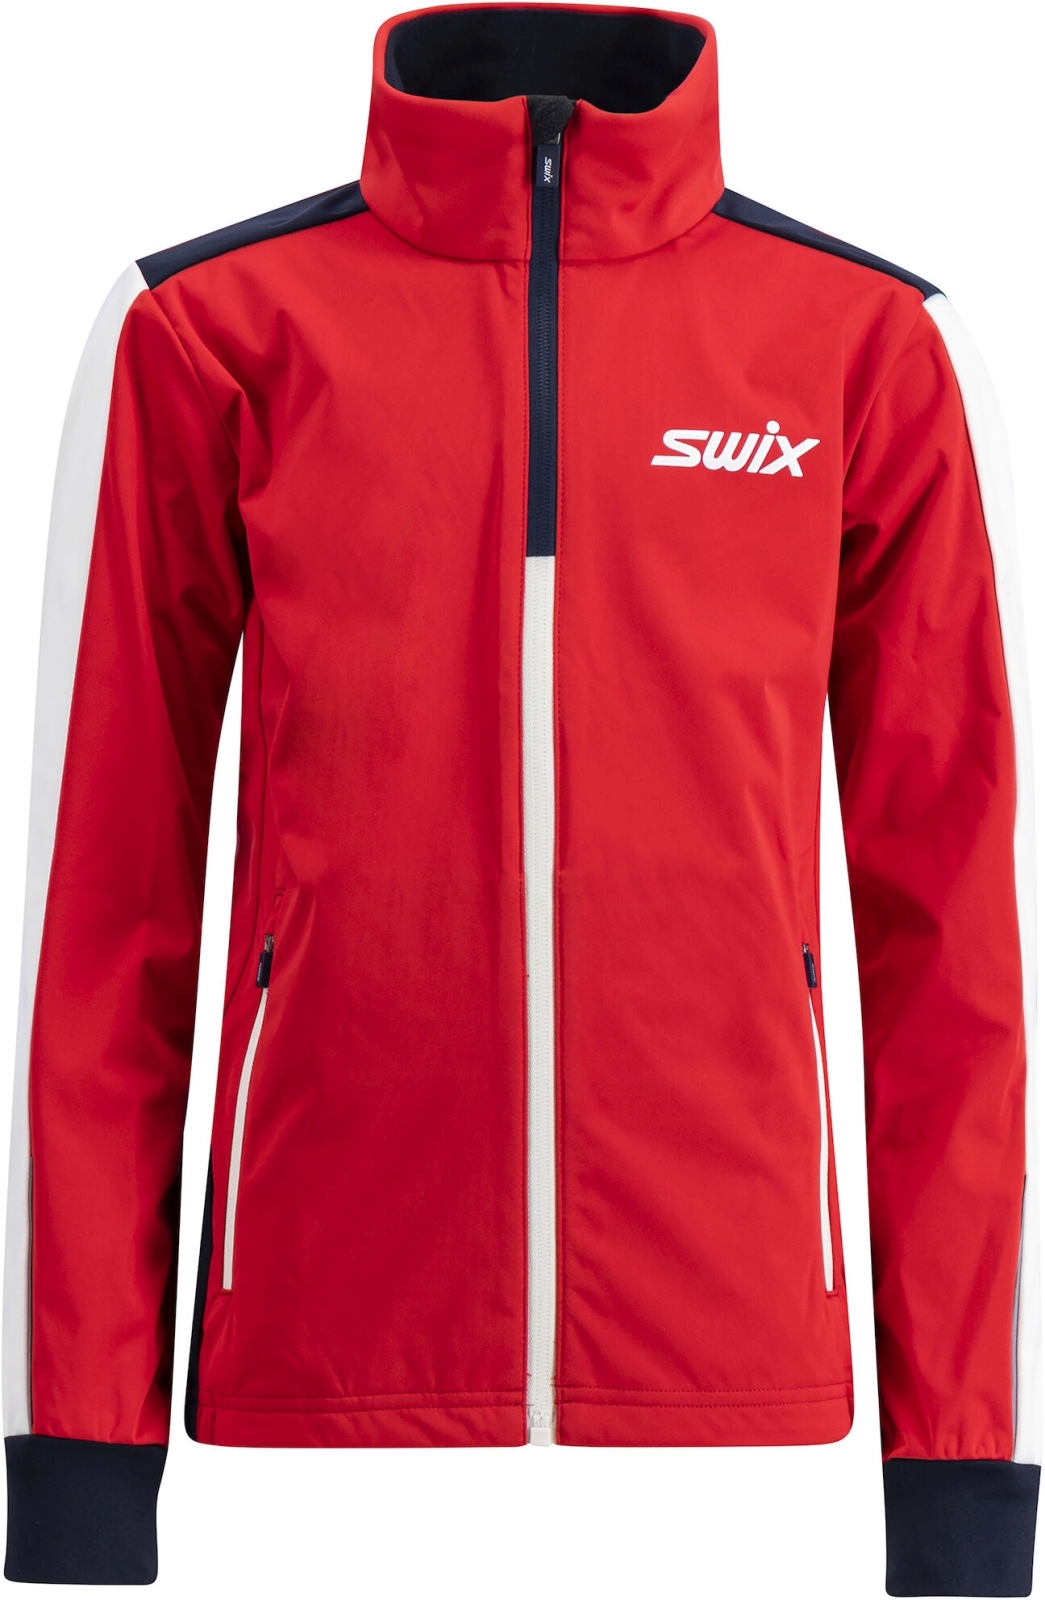 Swix Cross Jacket - Swix red 116